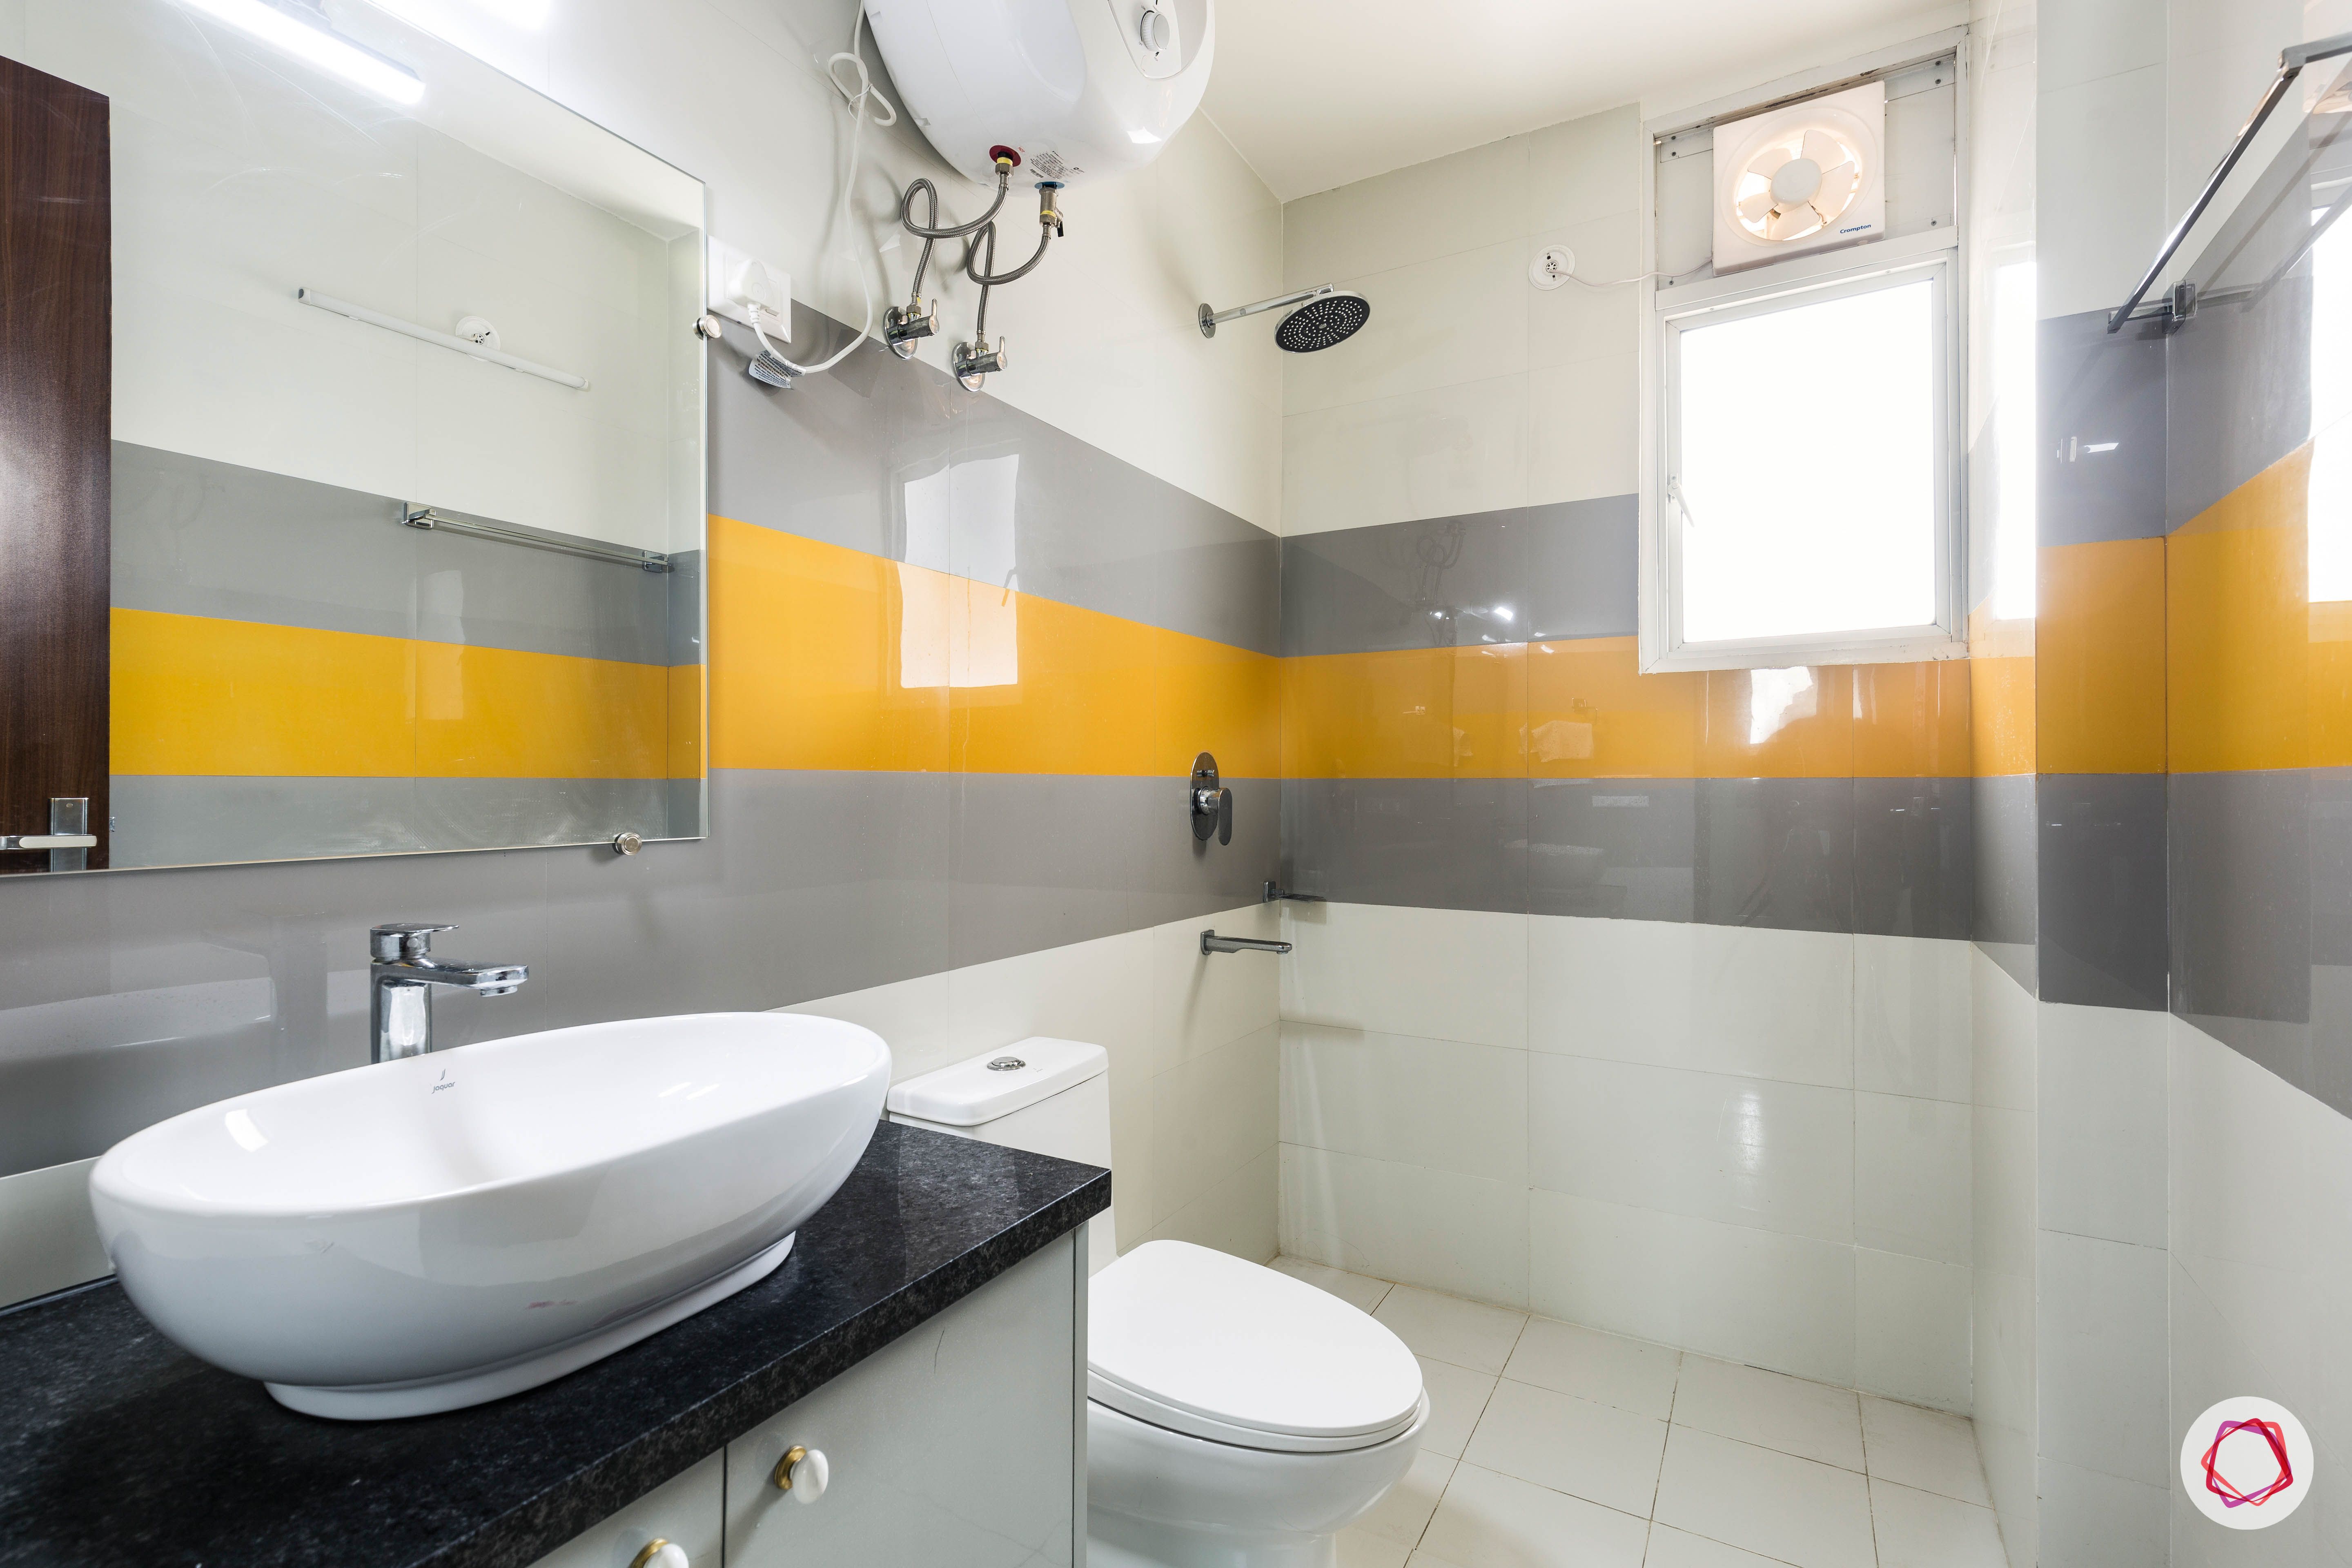 bathroom-yellow-grey-tiles-white-sink